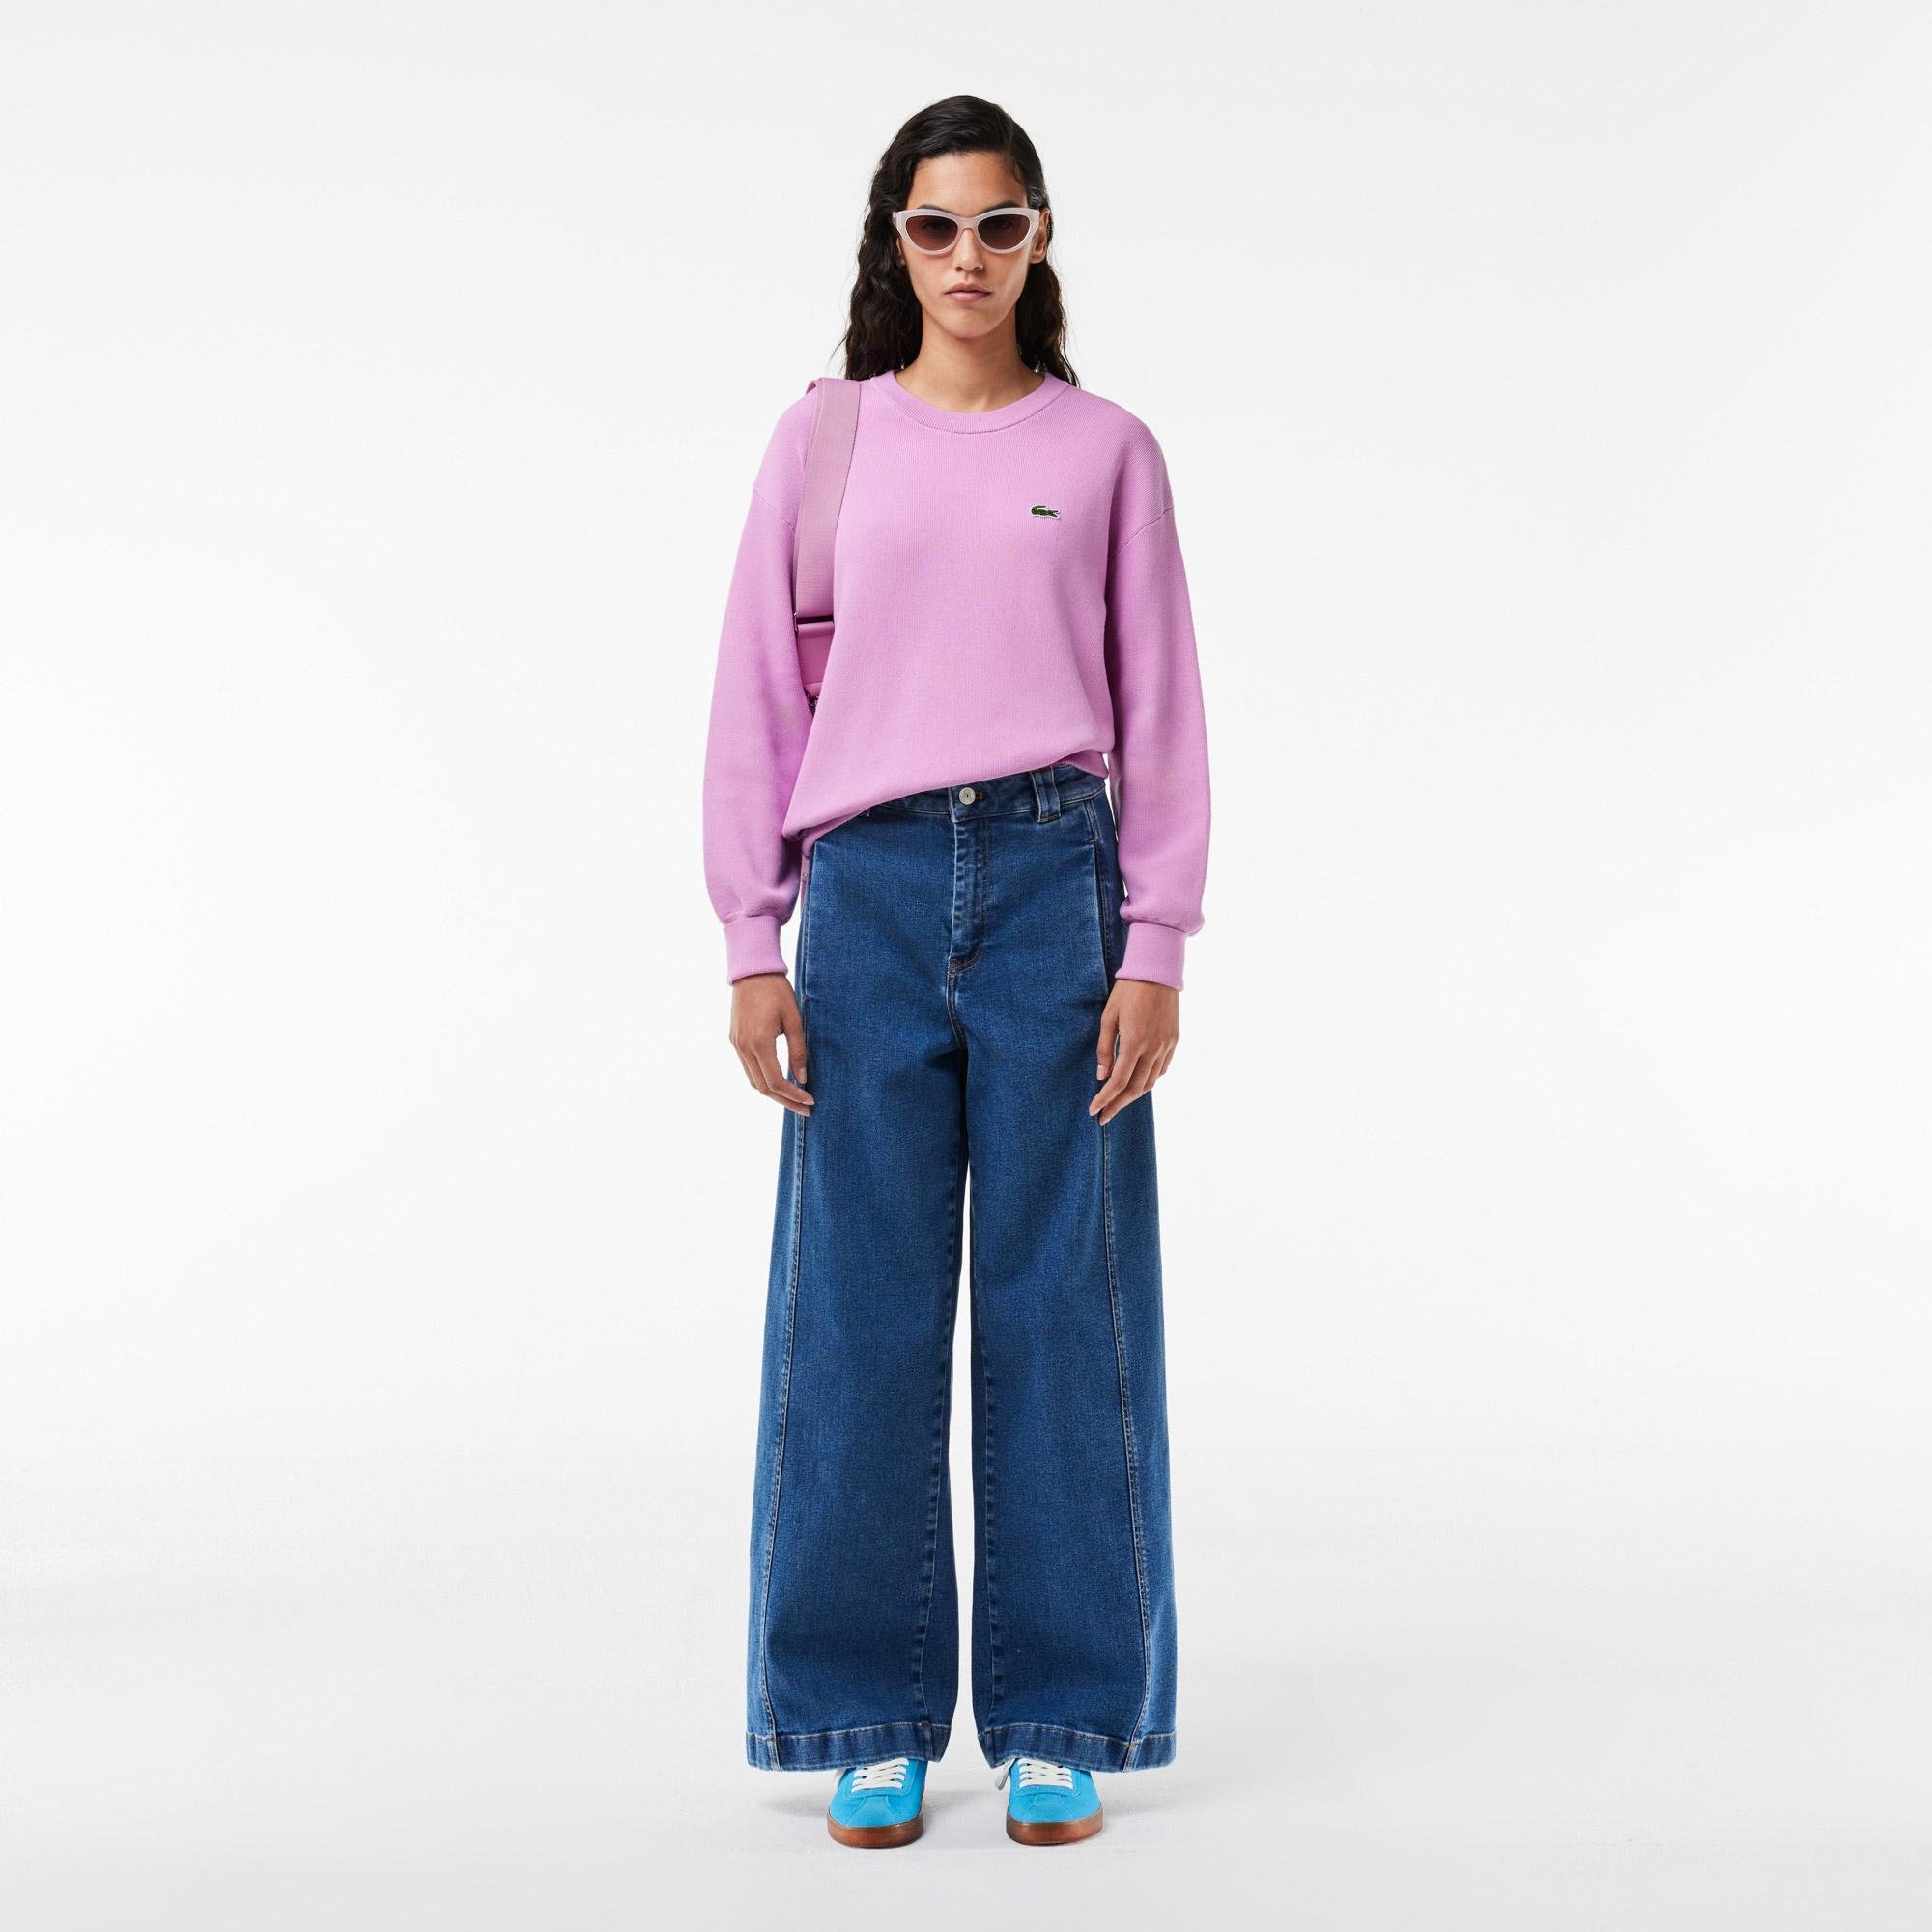 Lacoste Women’s Round Neck Organic Cotton Sweater